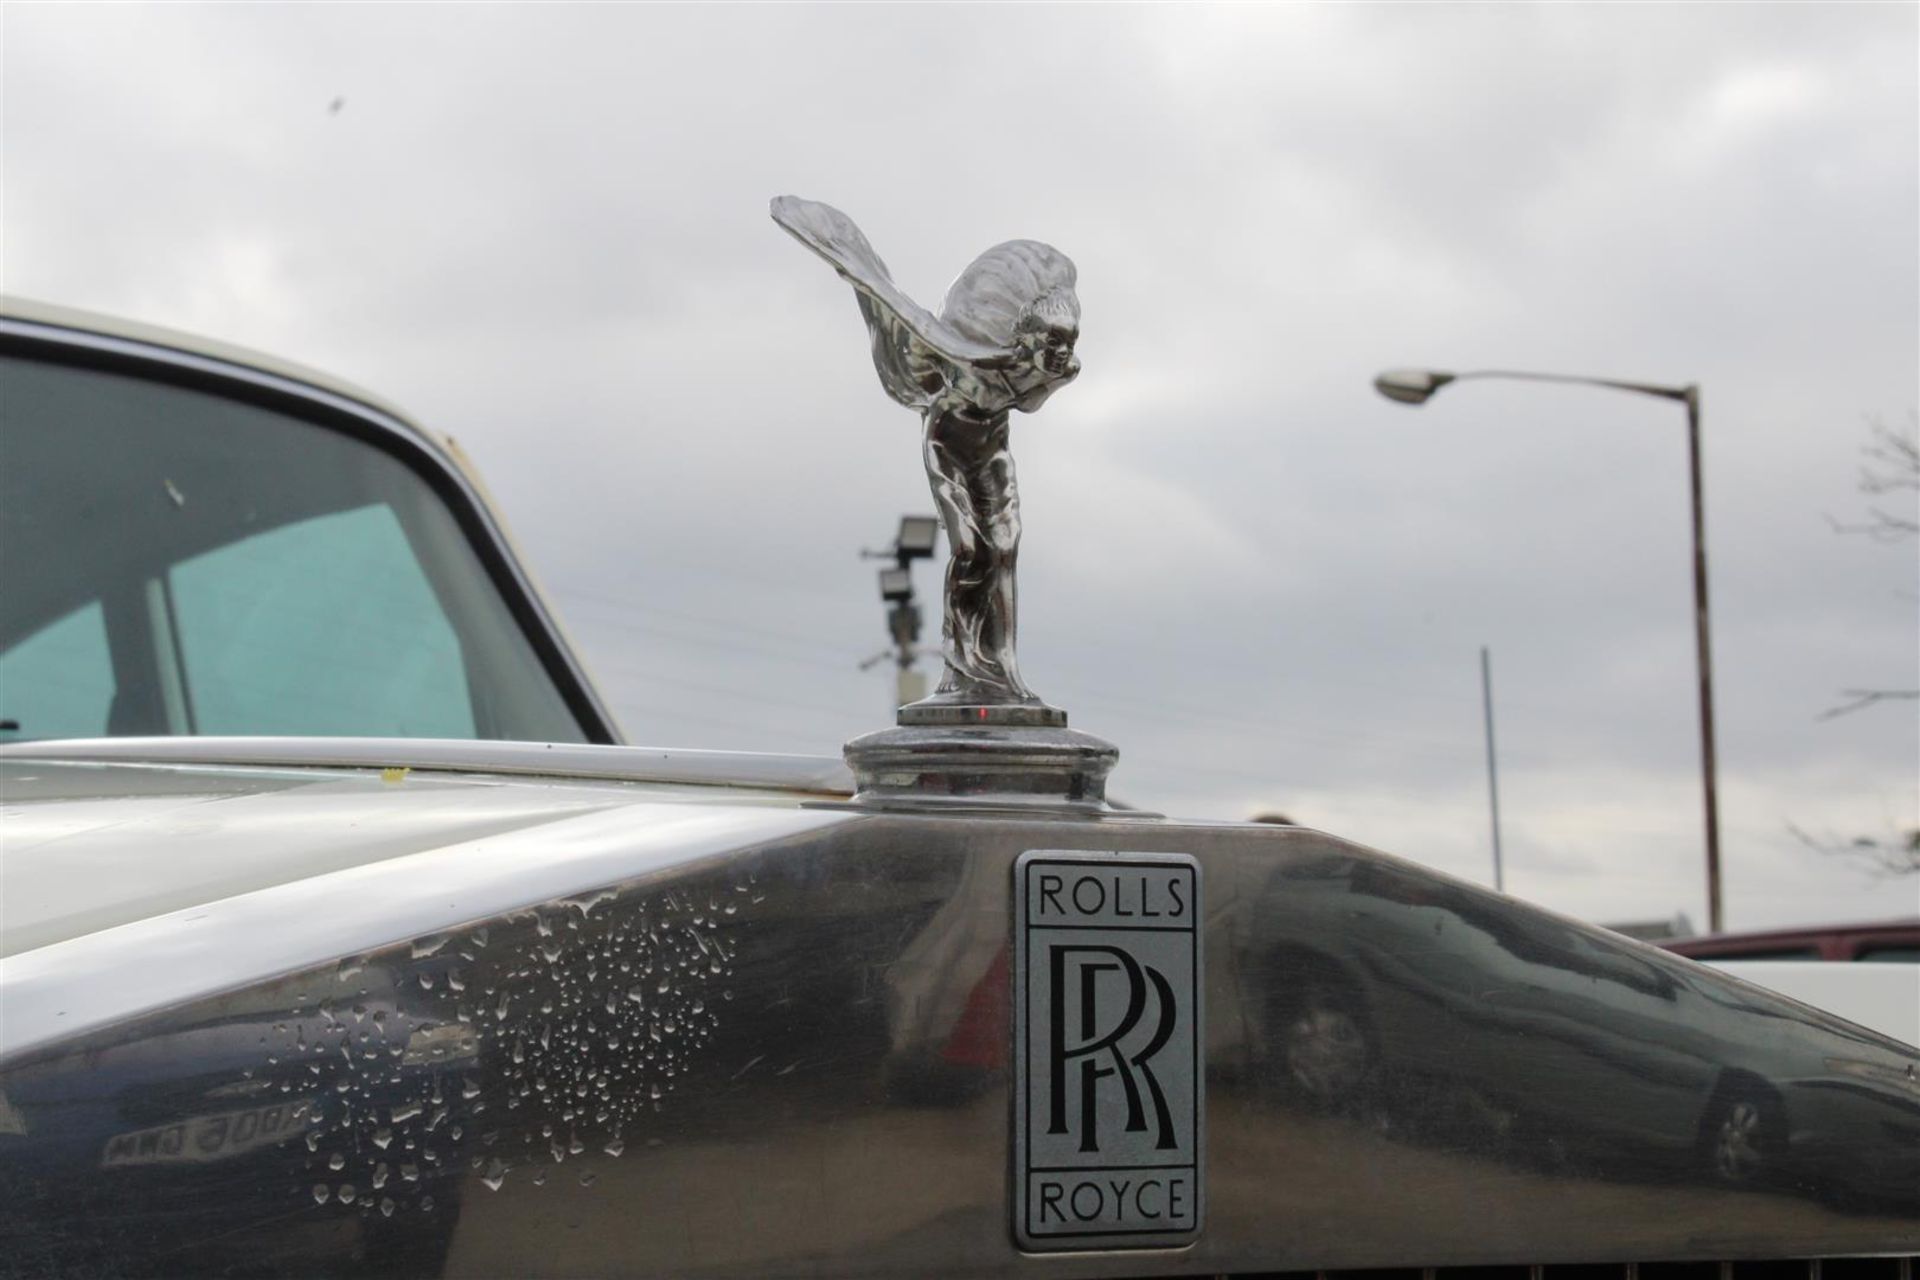 1974 Rolls Royce Silver Shadow - Image 17 of 33